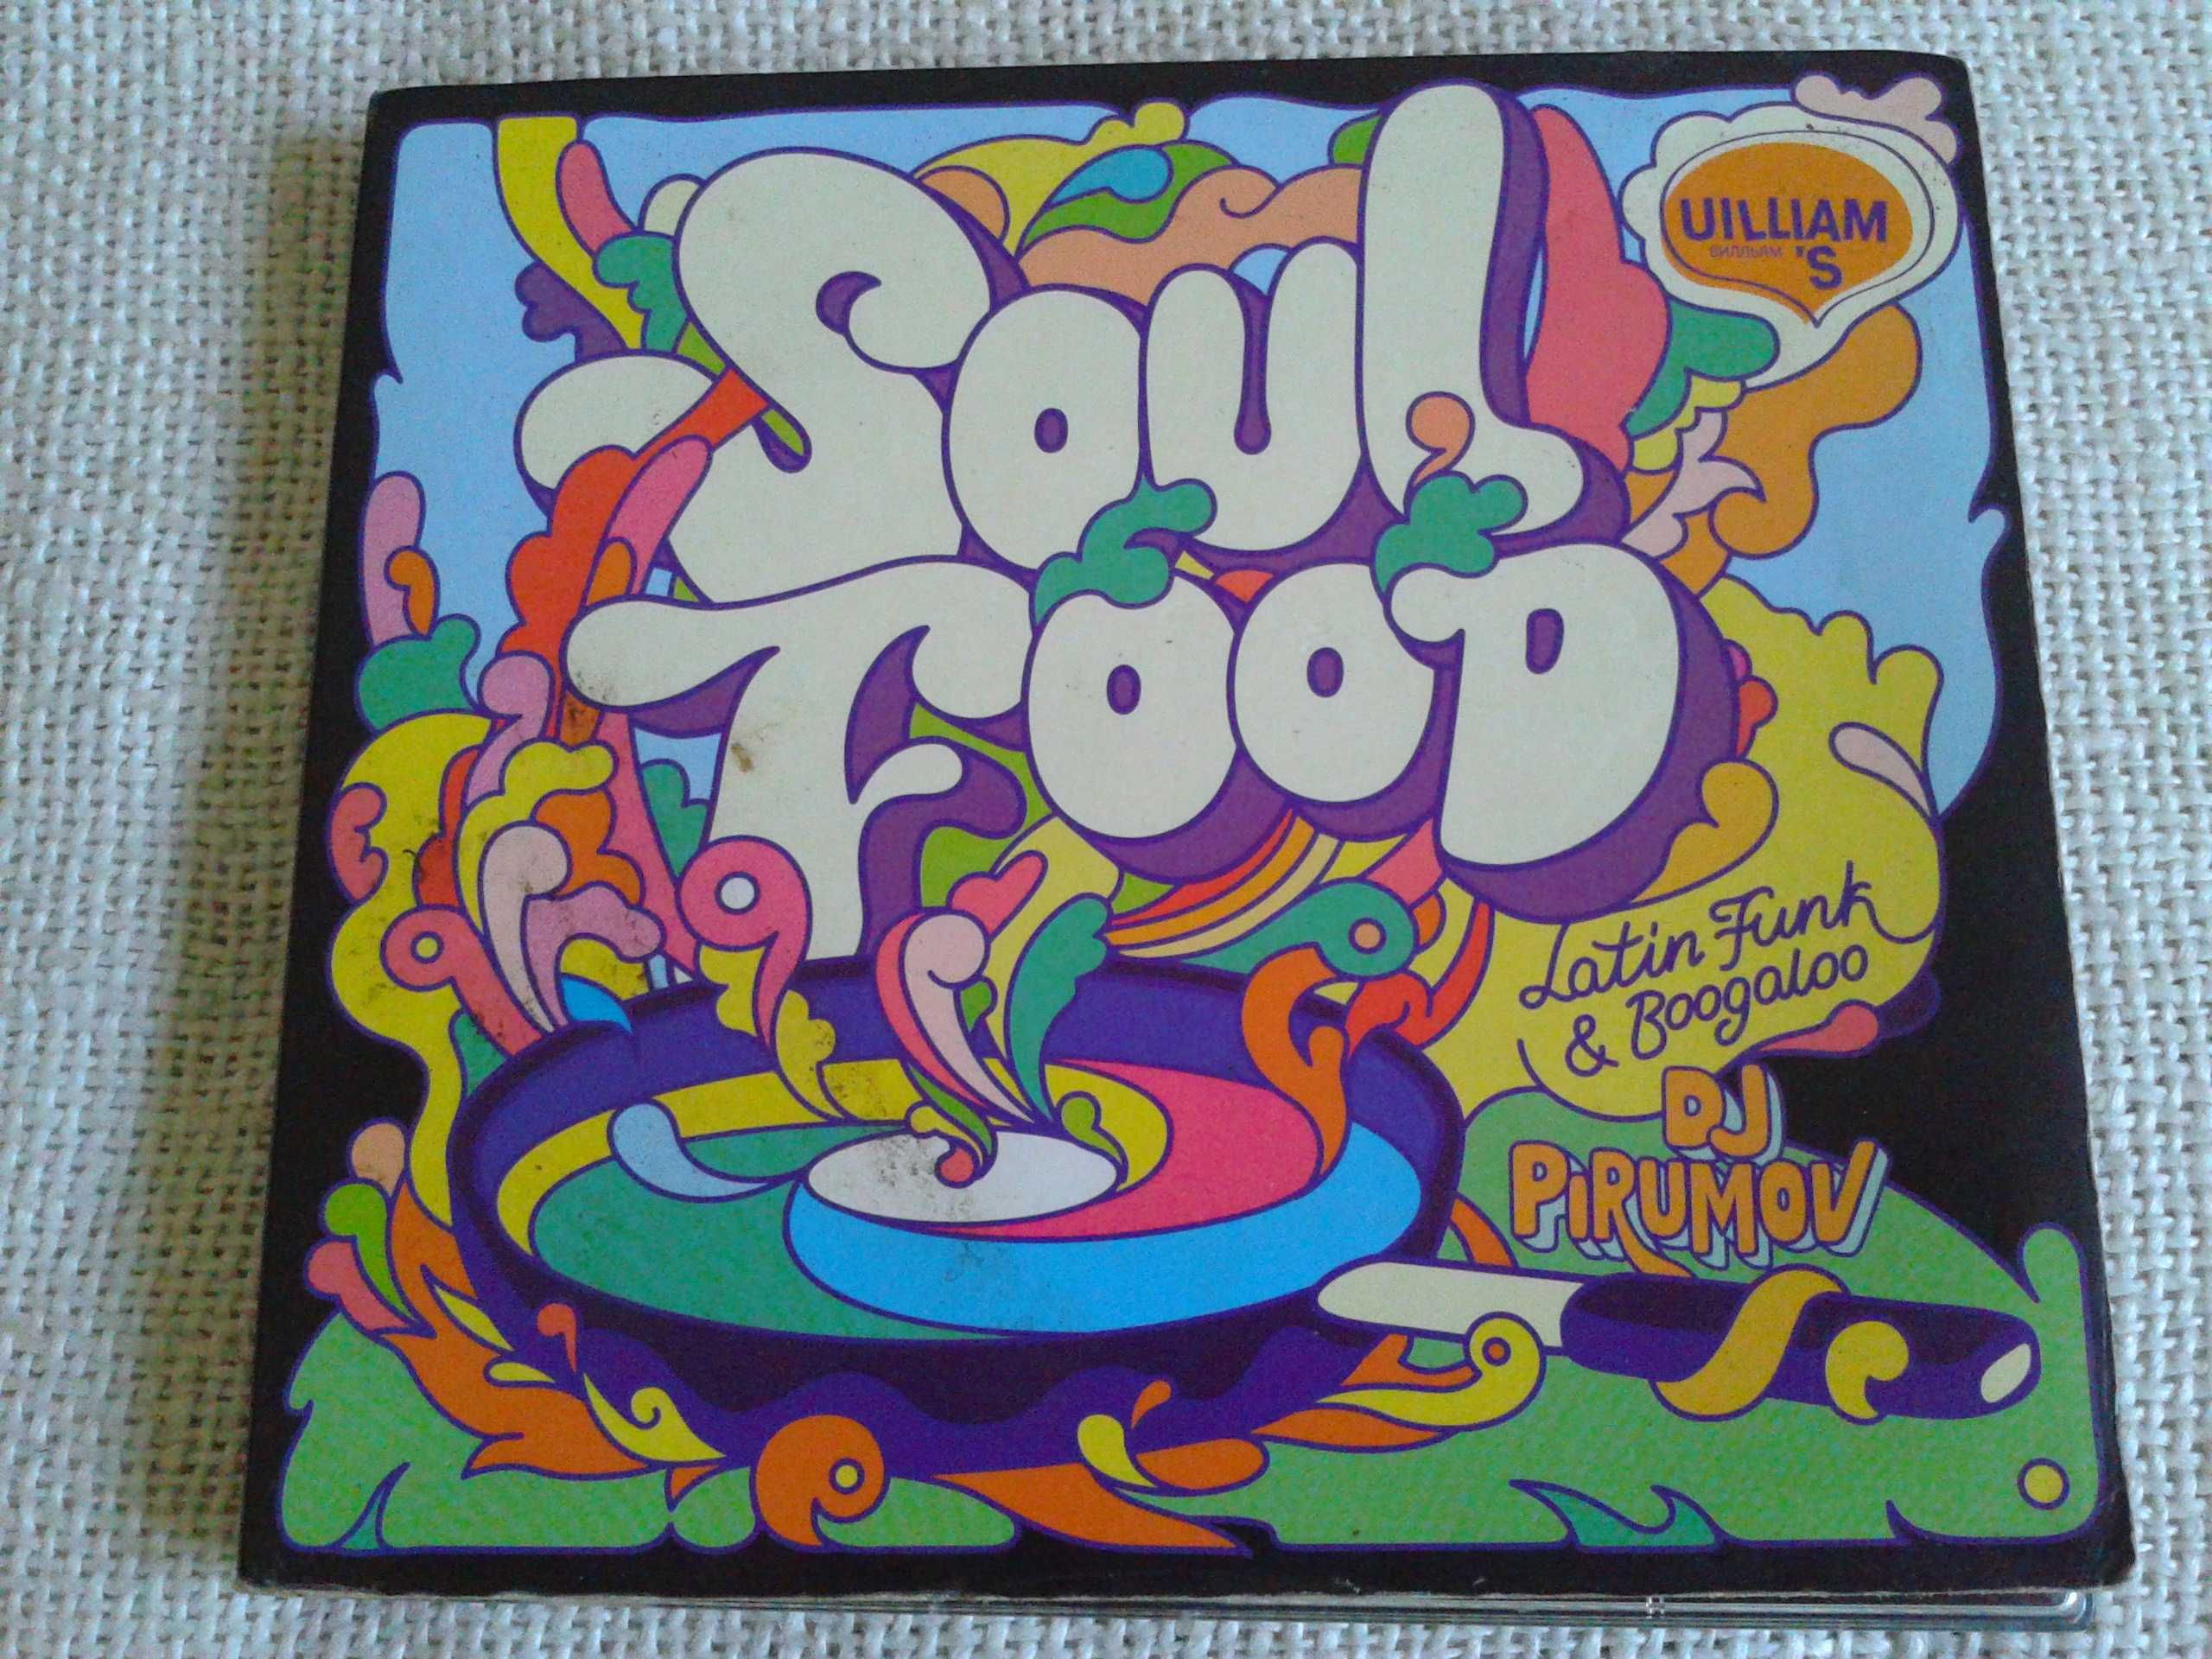 Dj Pirumov - Soul Food, Latin Funk & Boogaloo  CD